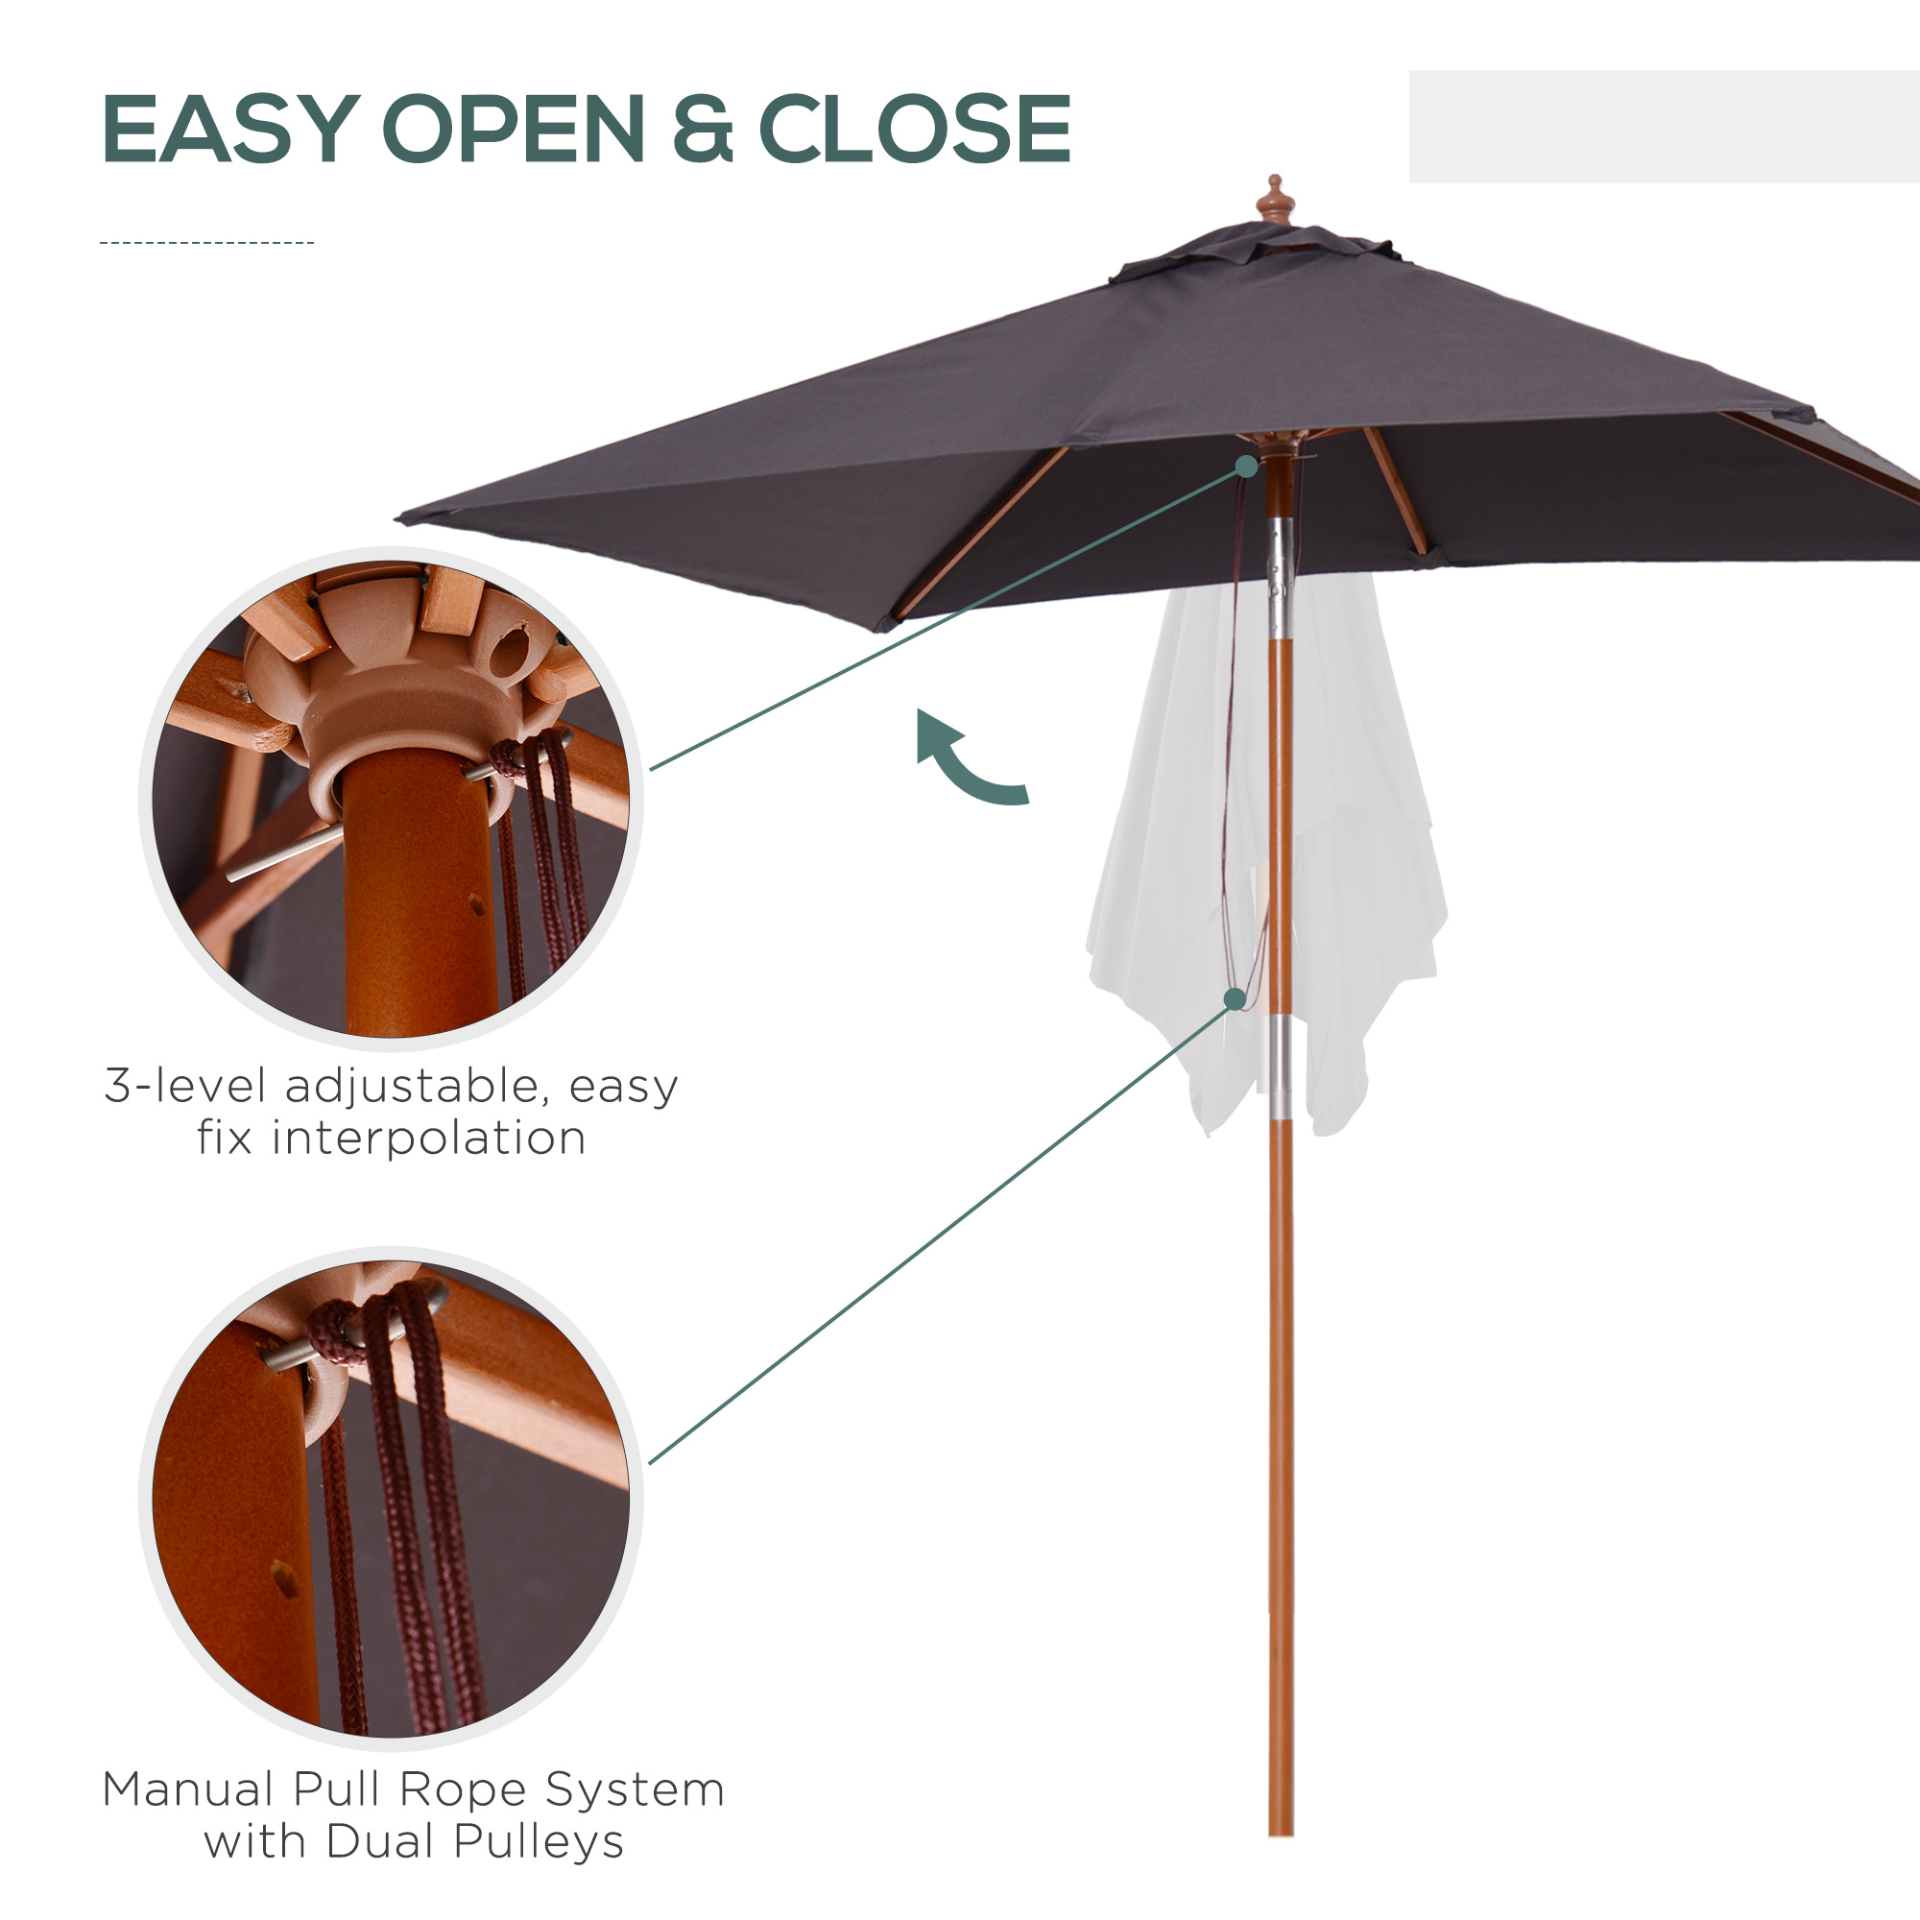 Outsunny 2m x 1.5m Patio Parasol Garden Umbrellas Sun Umbrella Bamboo Sunshade Canopy Outdoor Backyard Furniture Fir Wooden Pole 6 Ribs Tilt Mechanism - Deep Grey